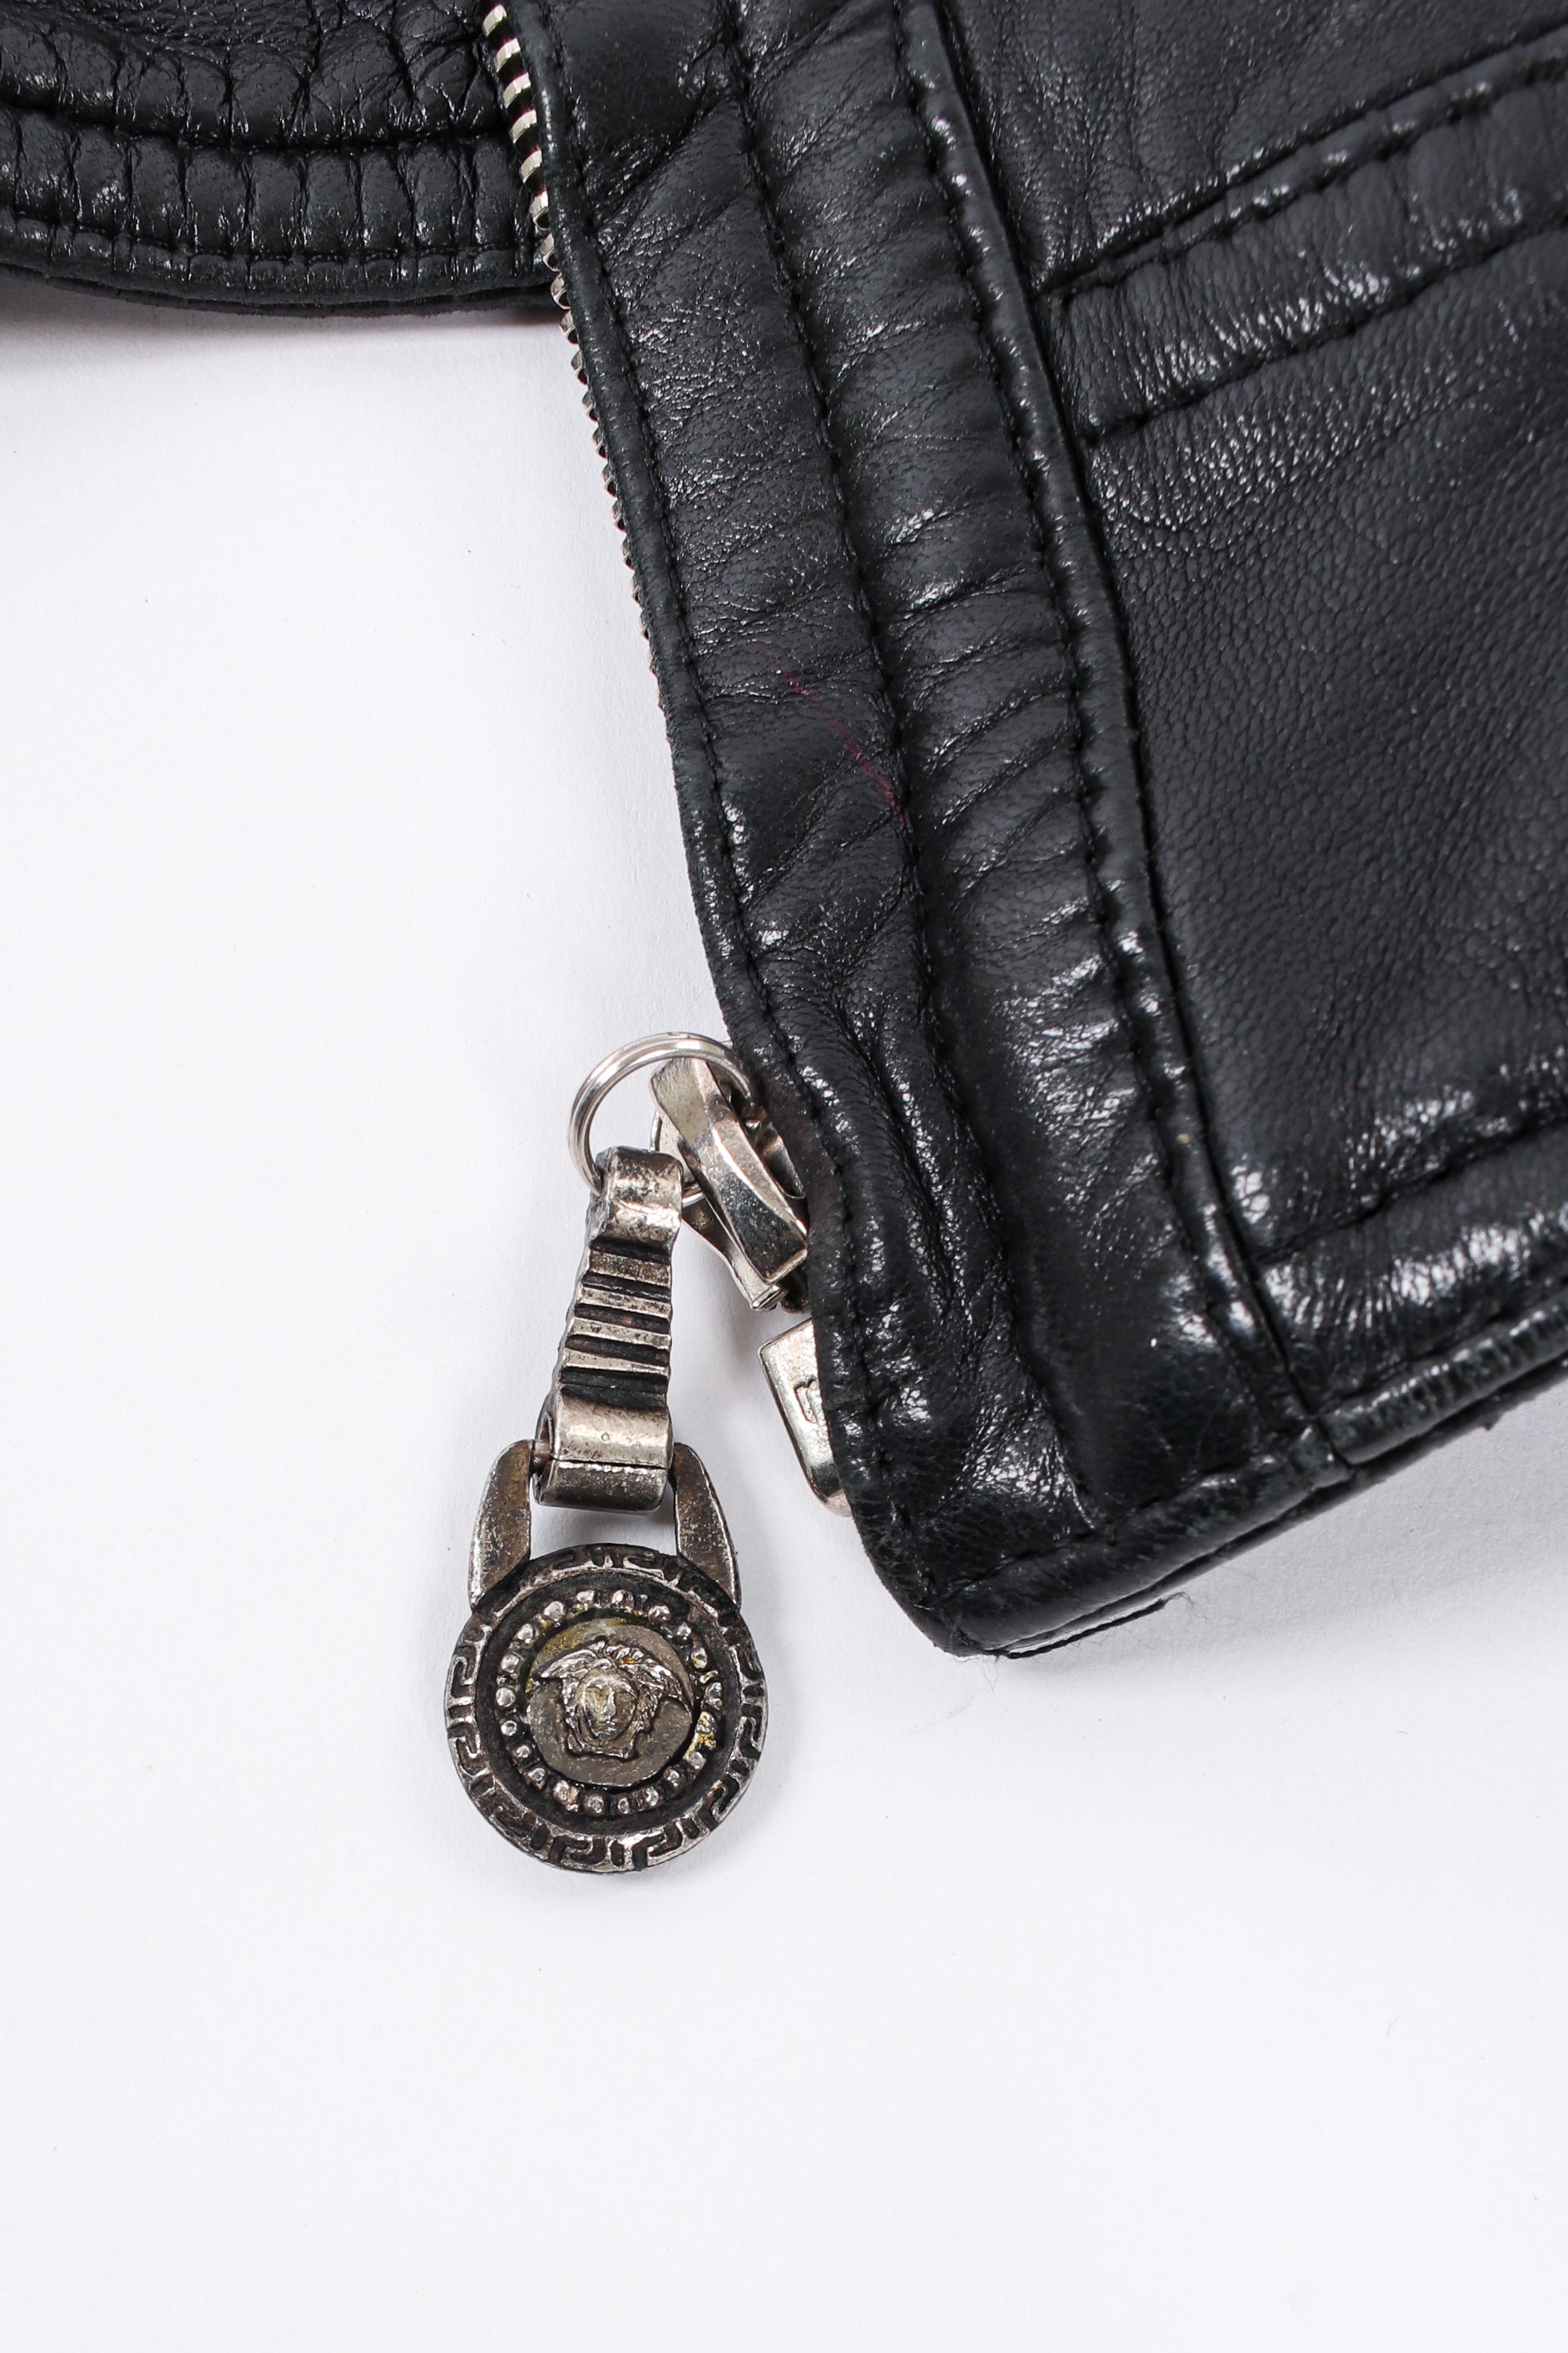 Vintage Gianni Versace Leather Bomber Jacket zipper pull close up  @ Recess LA